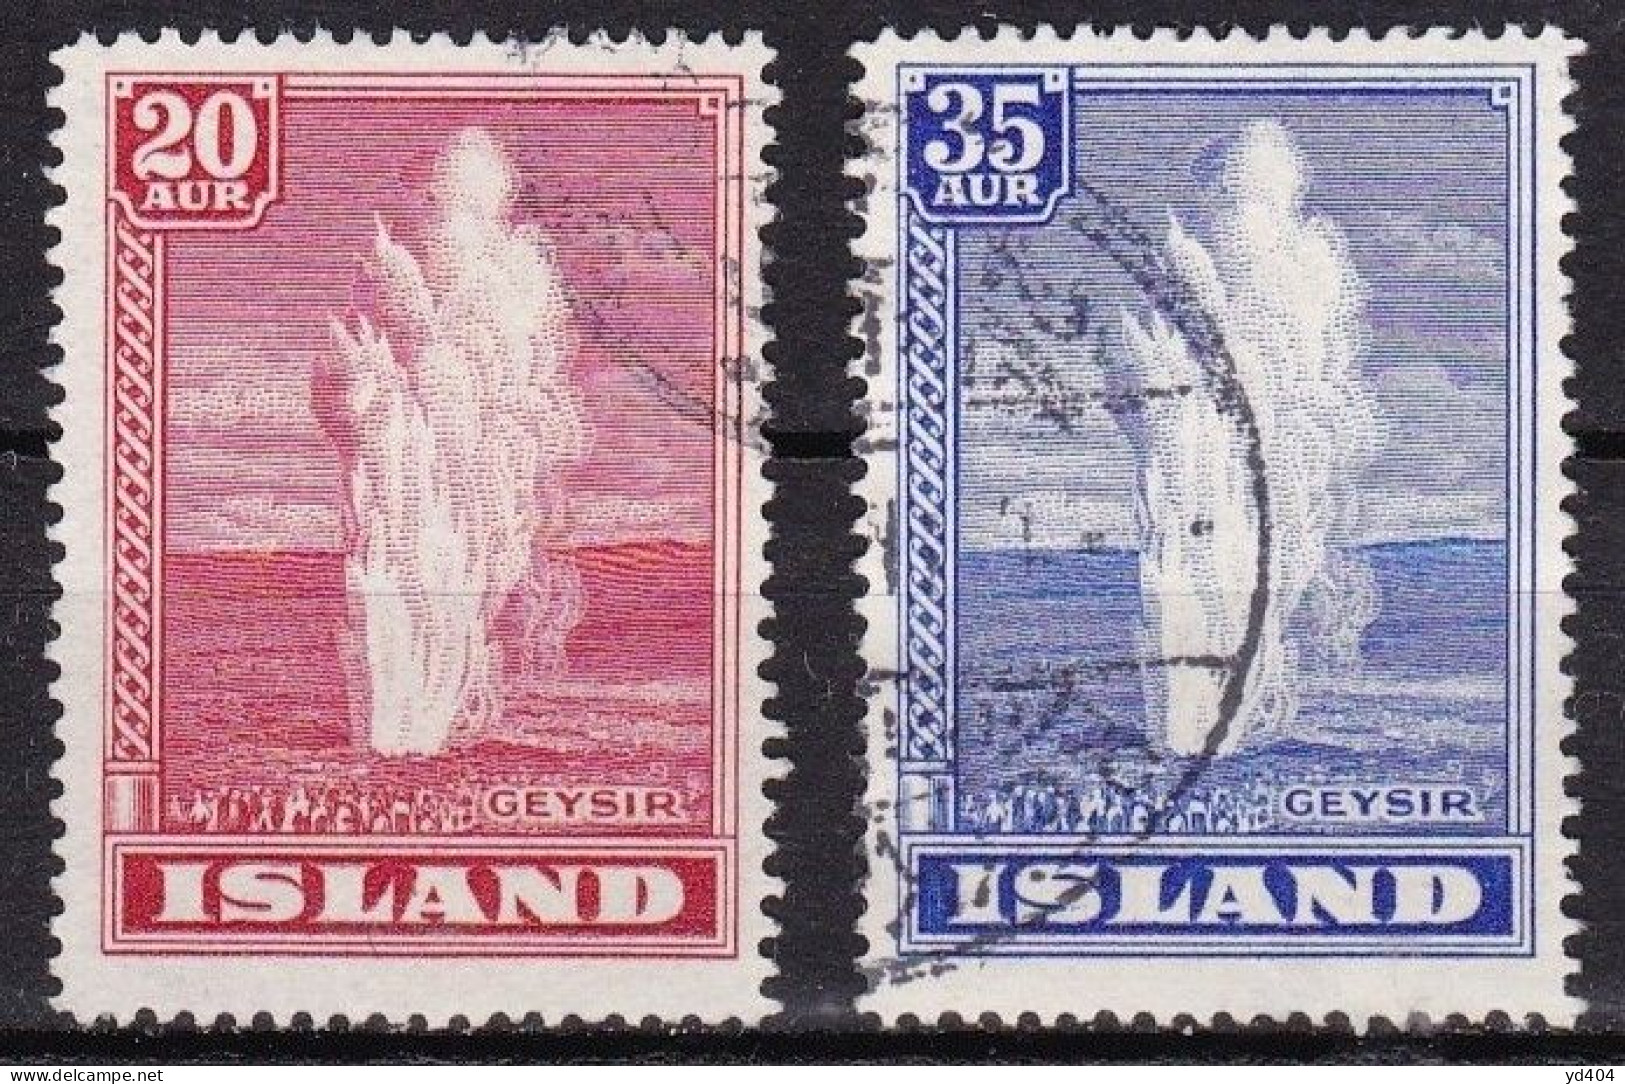 IS036B – ISLANDE – ICELAND – 1938 – THE GREAT GEYSER – SG # 225/6 USED - Usati